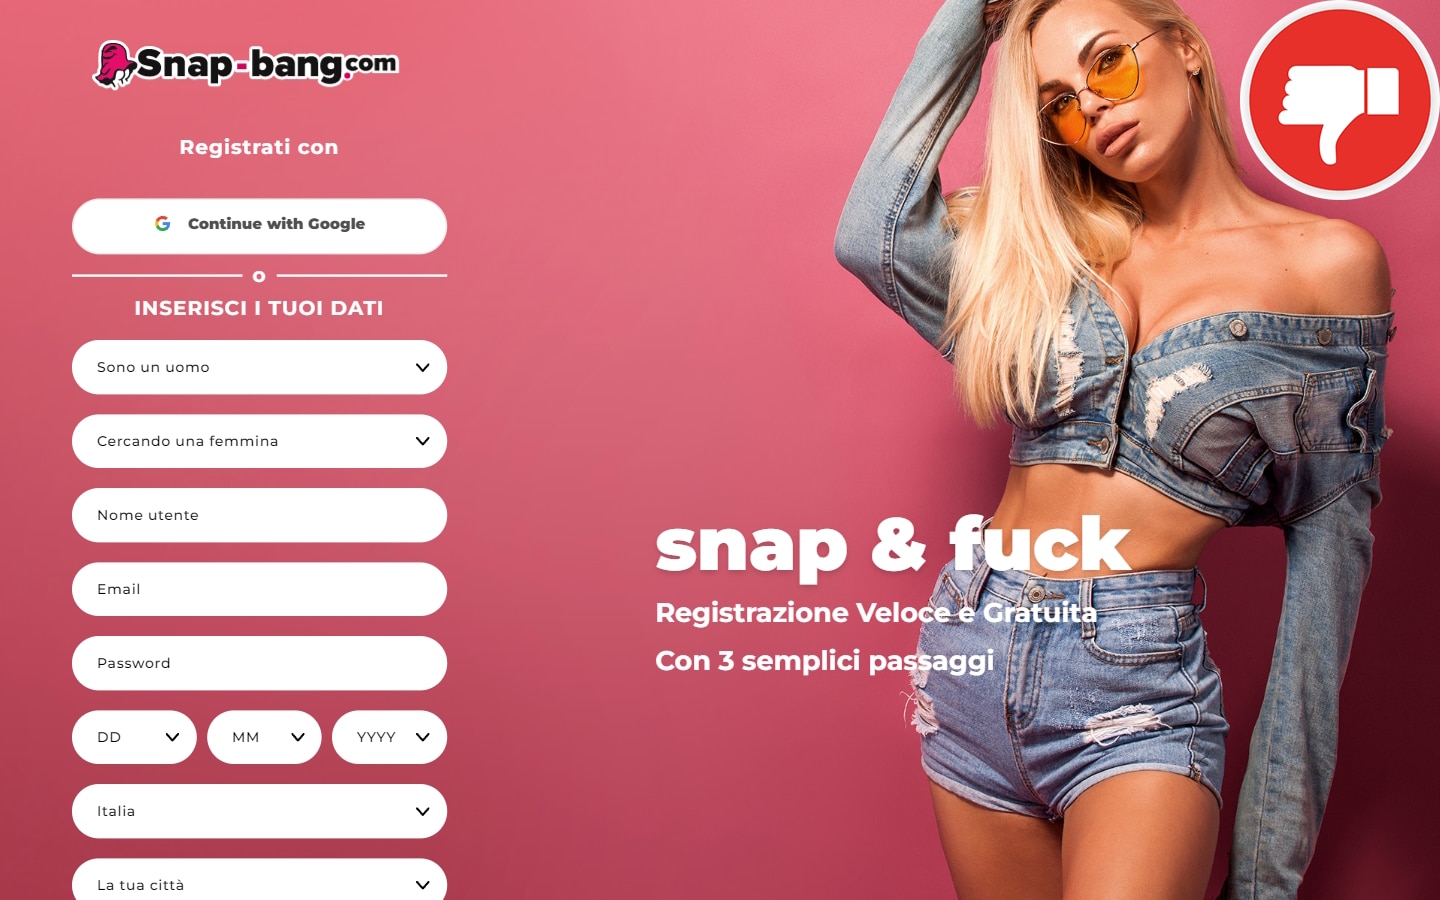 Recensione Snap-Bang.com Truffa